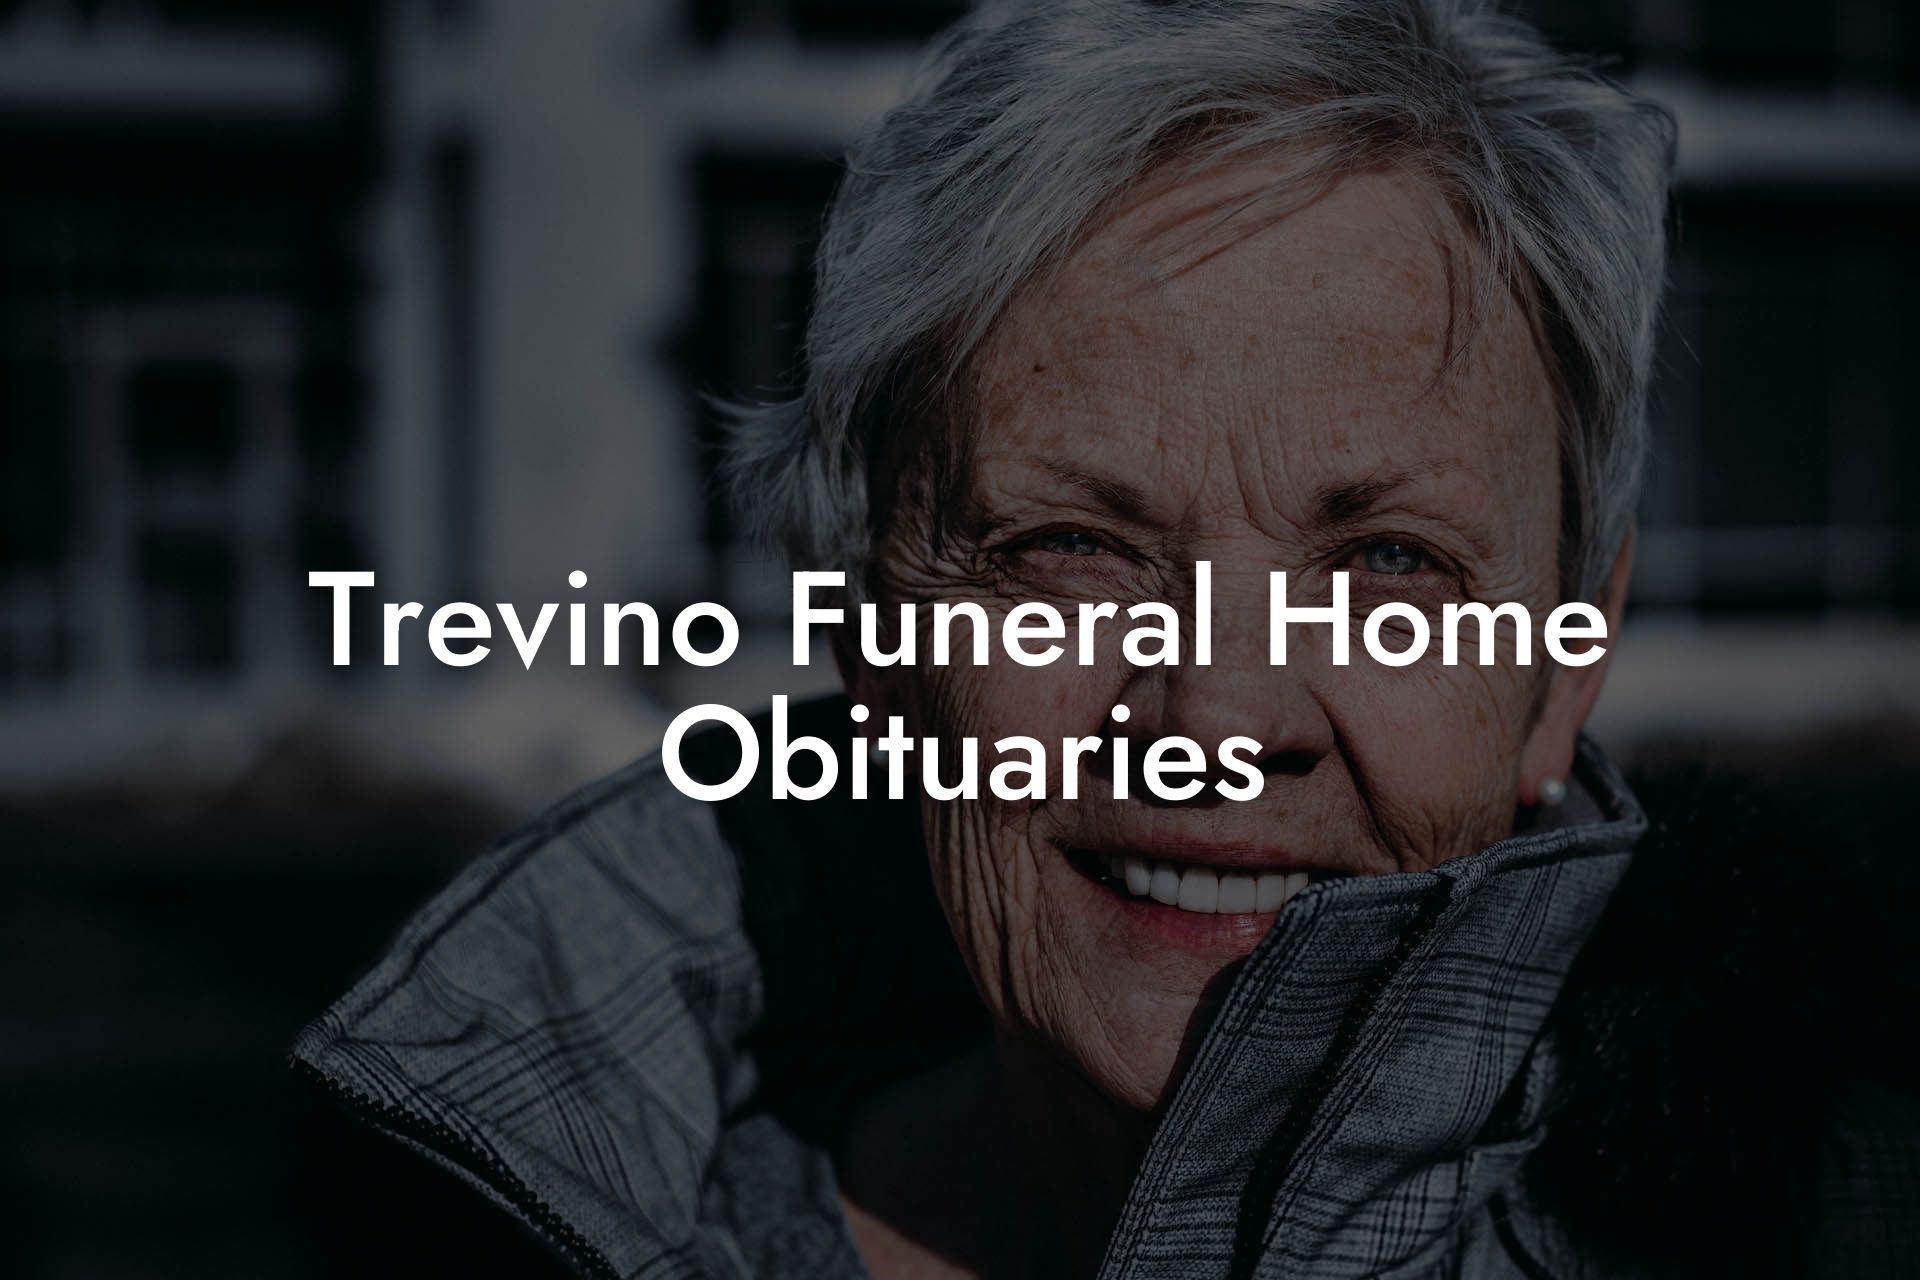 Trevino Funeral Home Obituaries